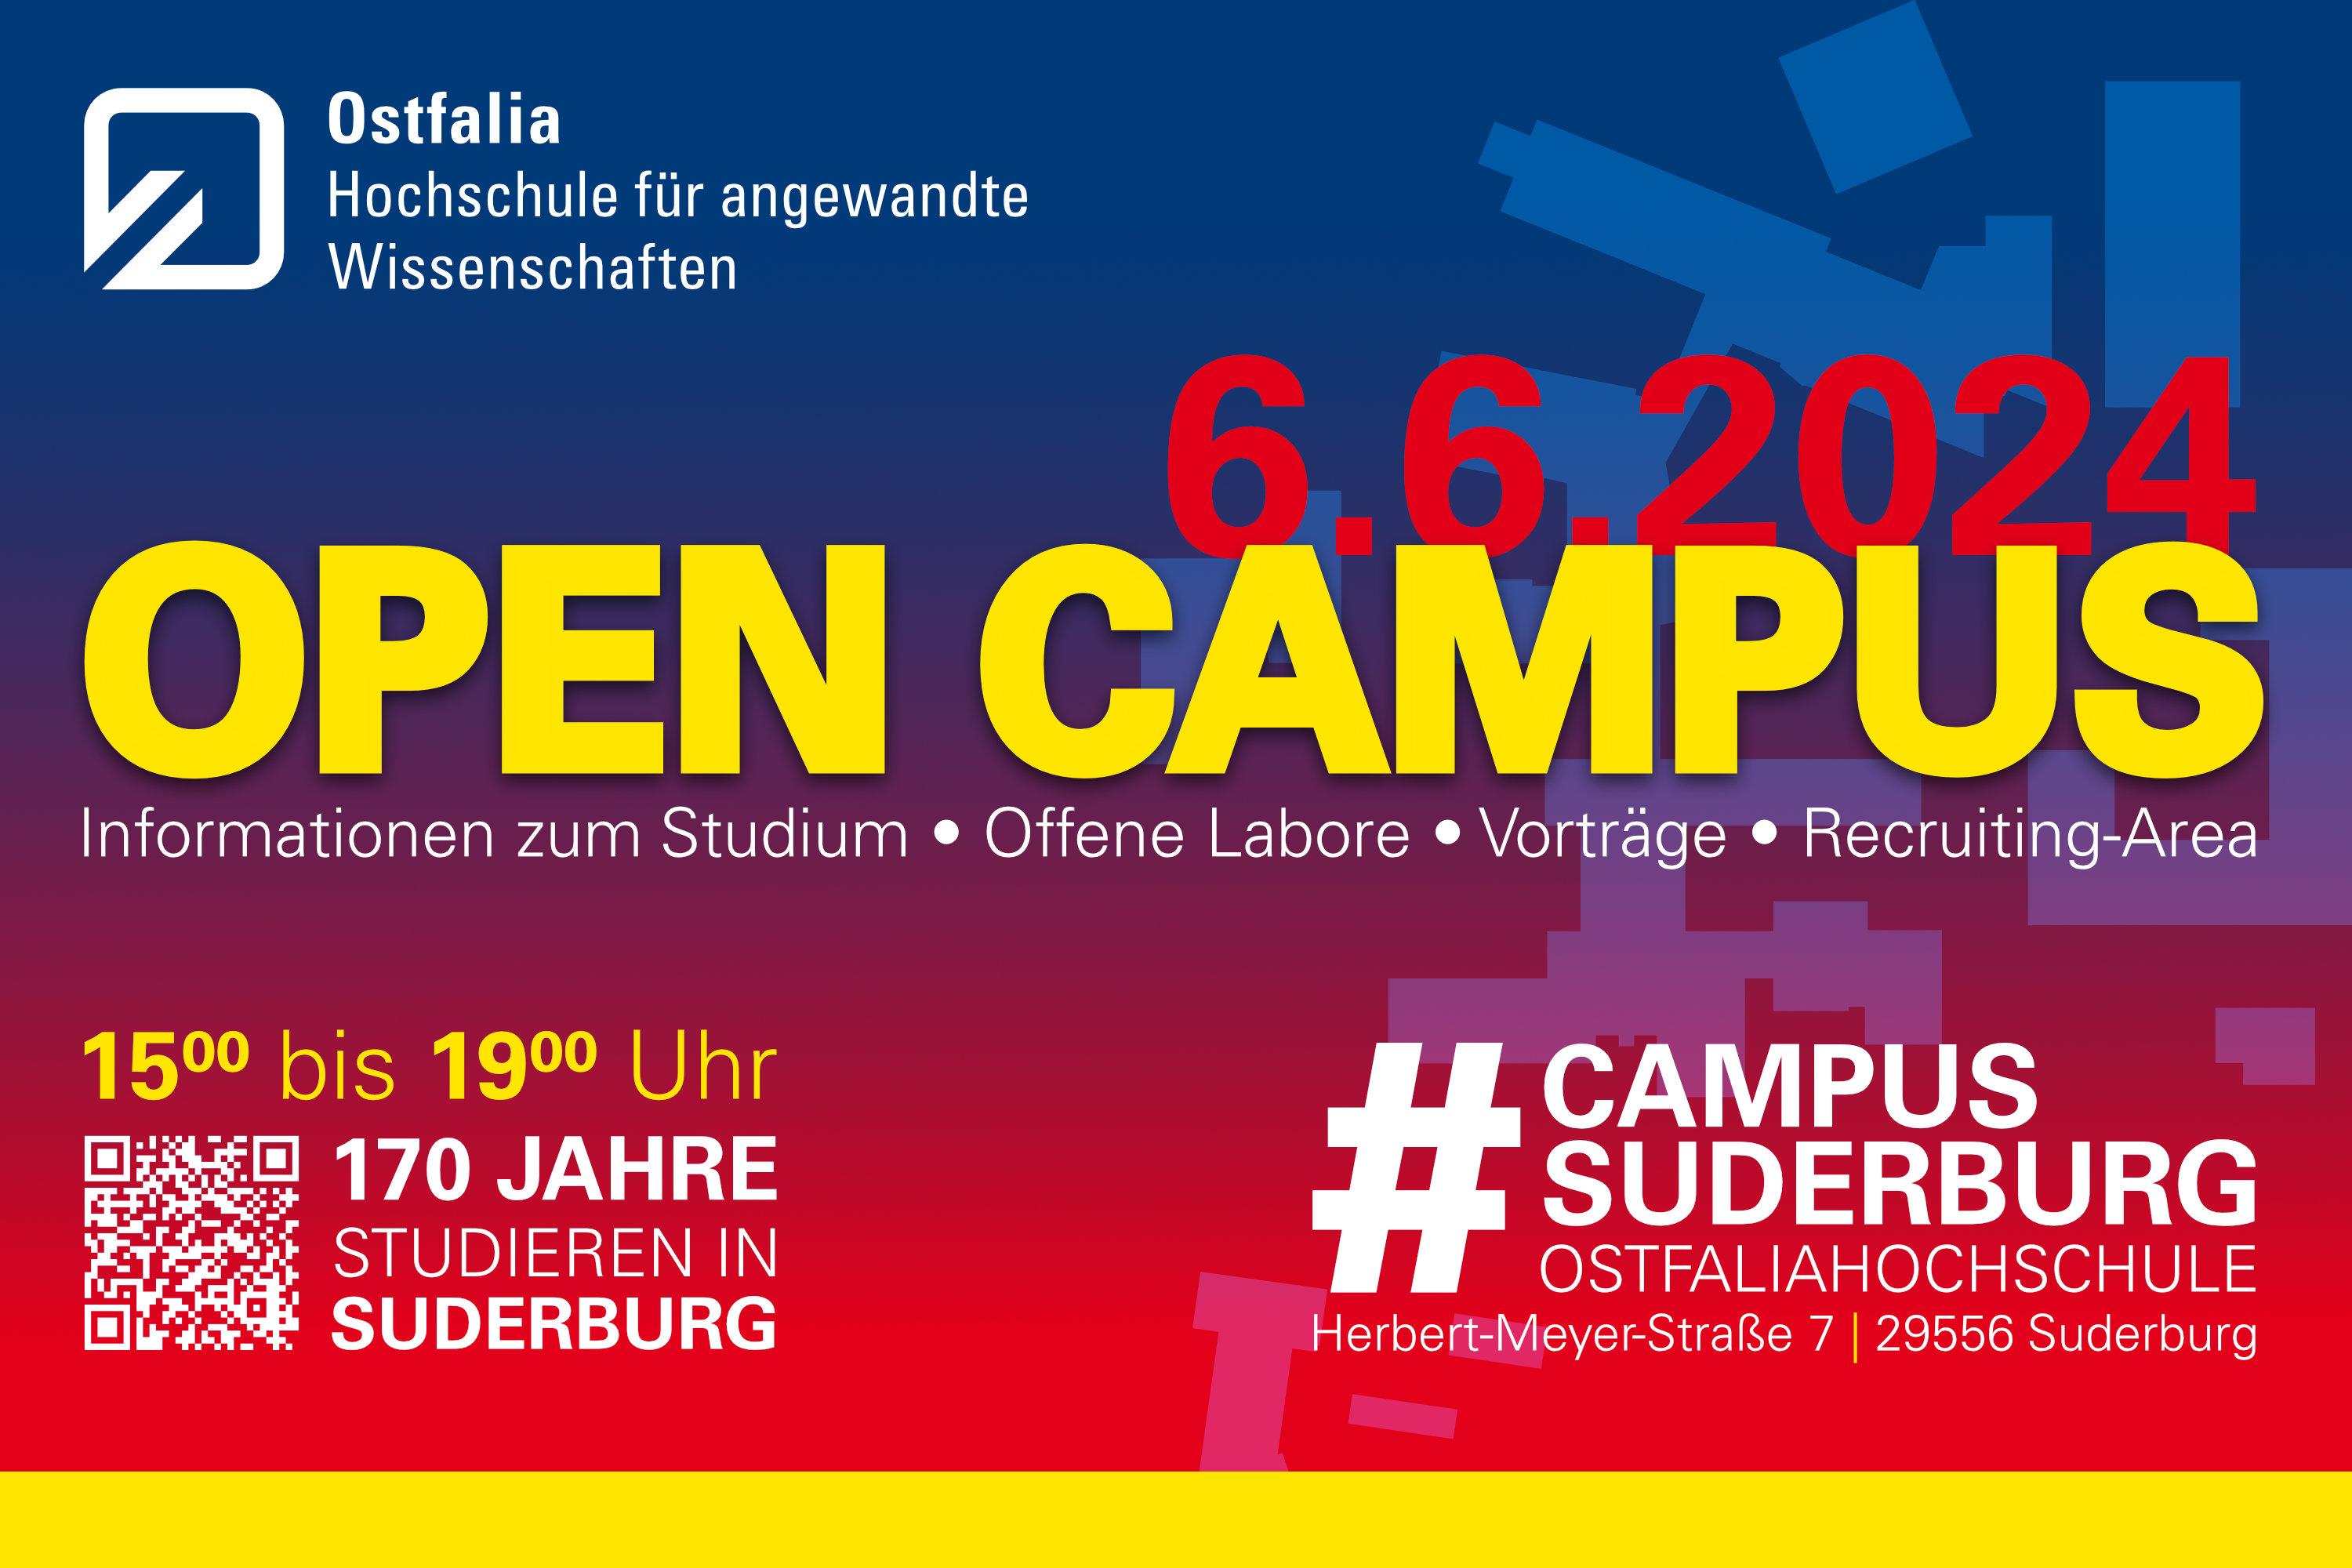 OPEN CAMPUS - 170 Jahre studieren am Ostfalia Campus Suderburg